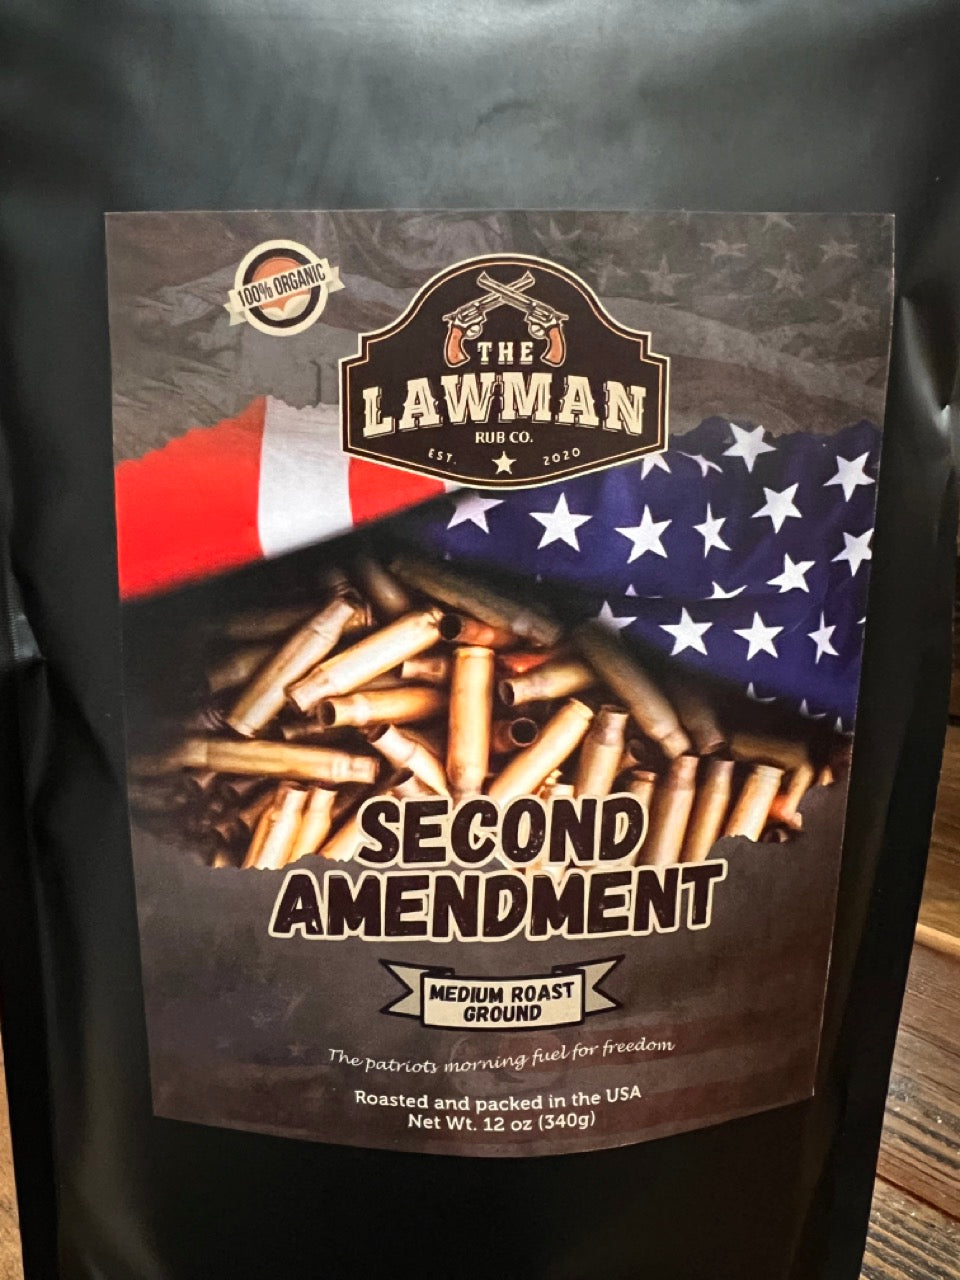 Second Amendment Ground Coffee